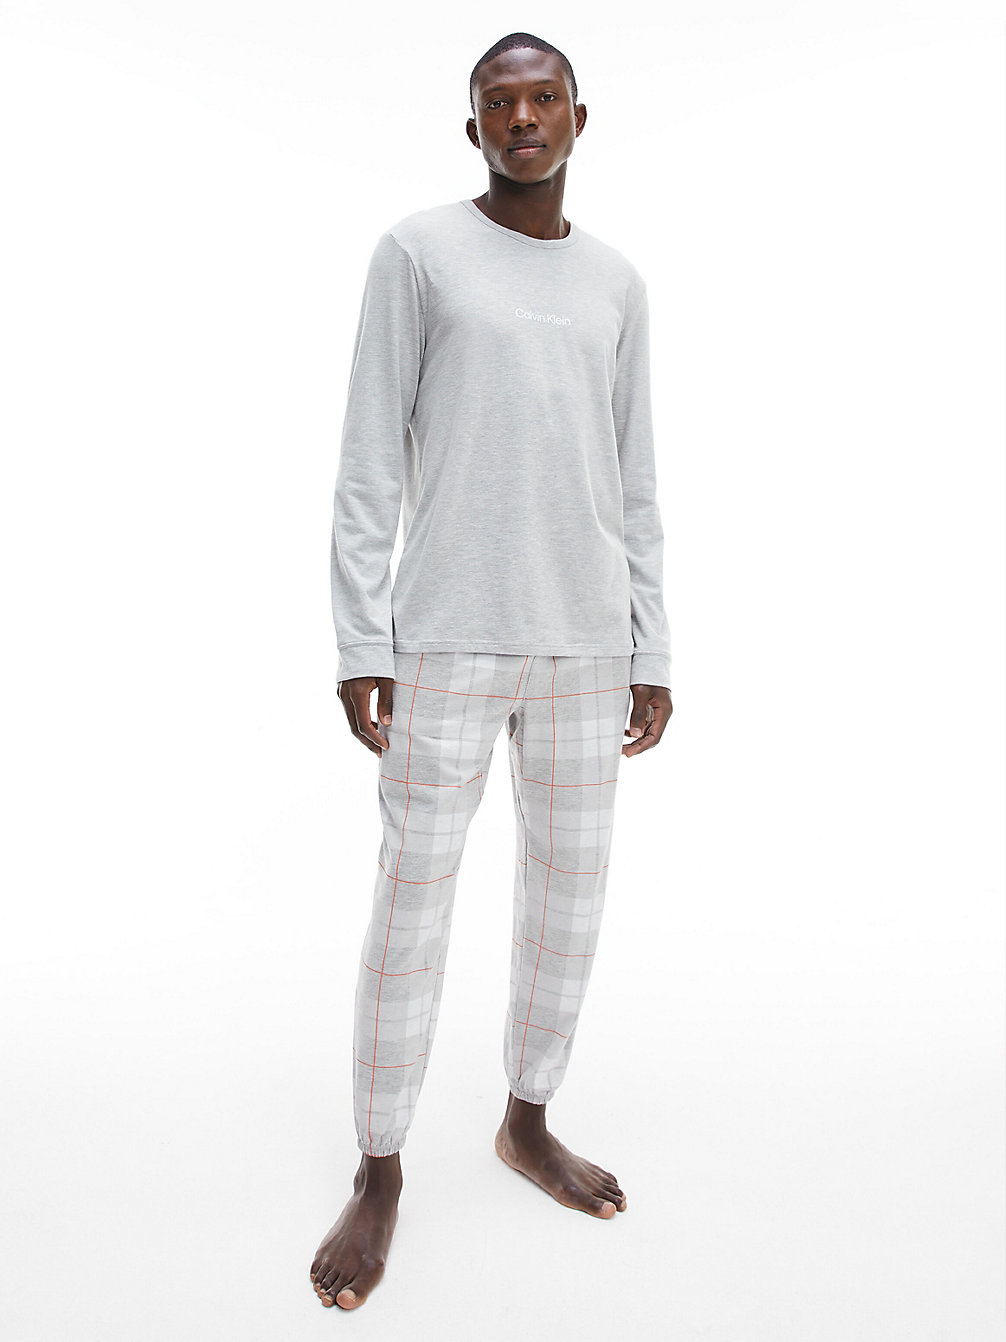 GREY H TOP, GRAPHIC PLAID BOTTOM > Пижама со штанами - Modern Structure > undefined женщины - Calvin Klein